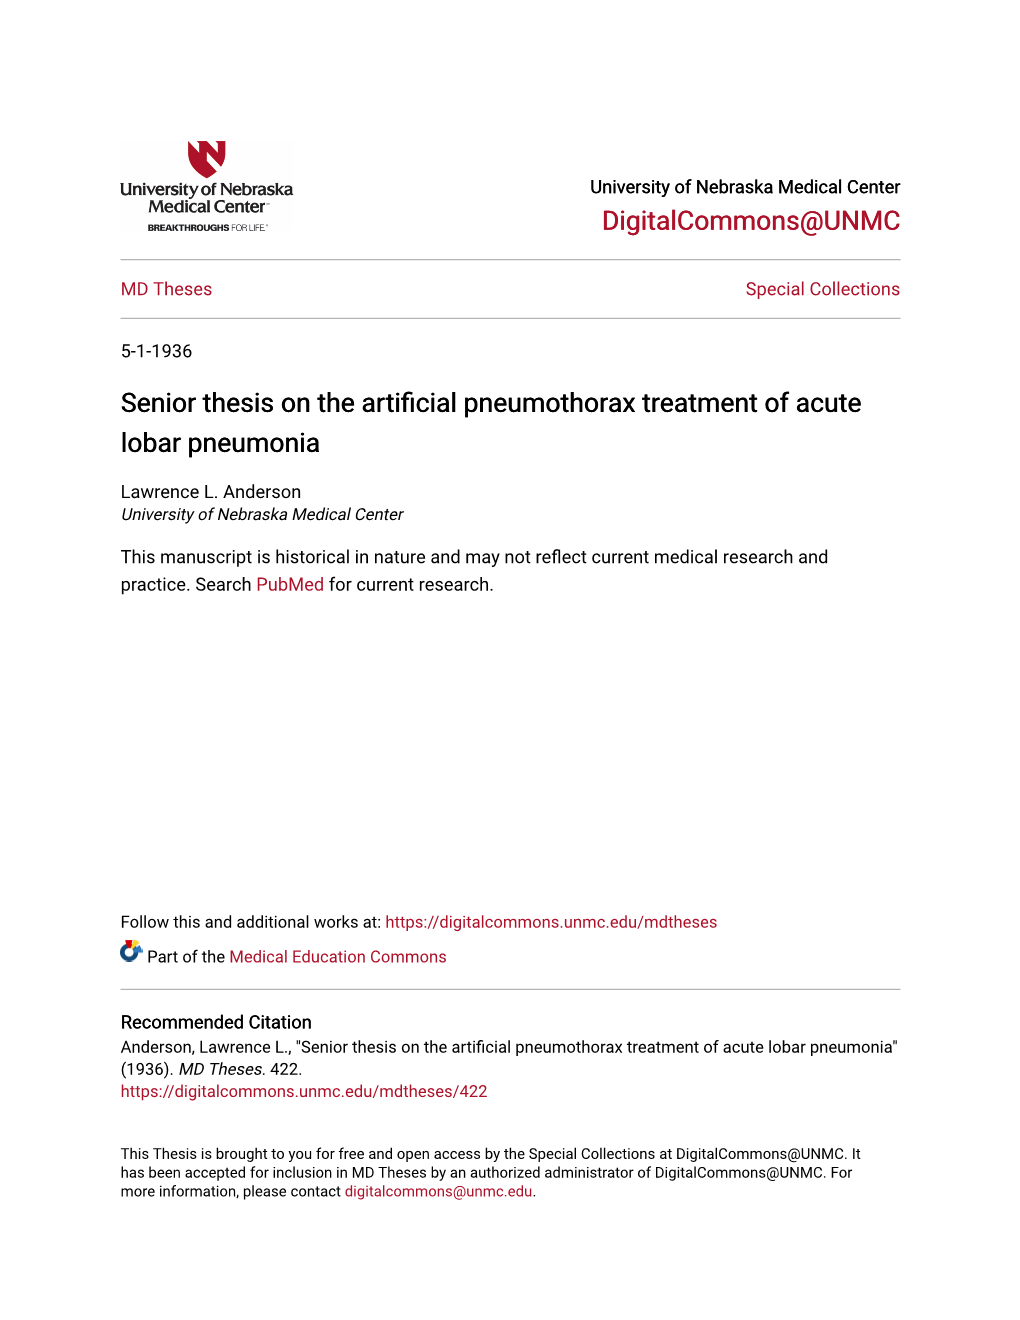 Senior Thesis on the Artificial Pneumothorax Treatment of Acute Lobar Pneumonia